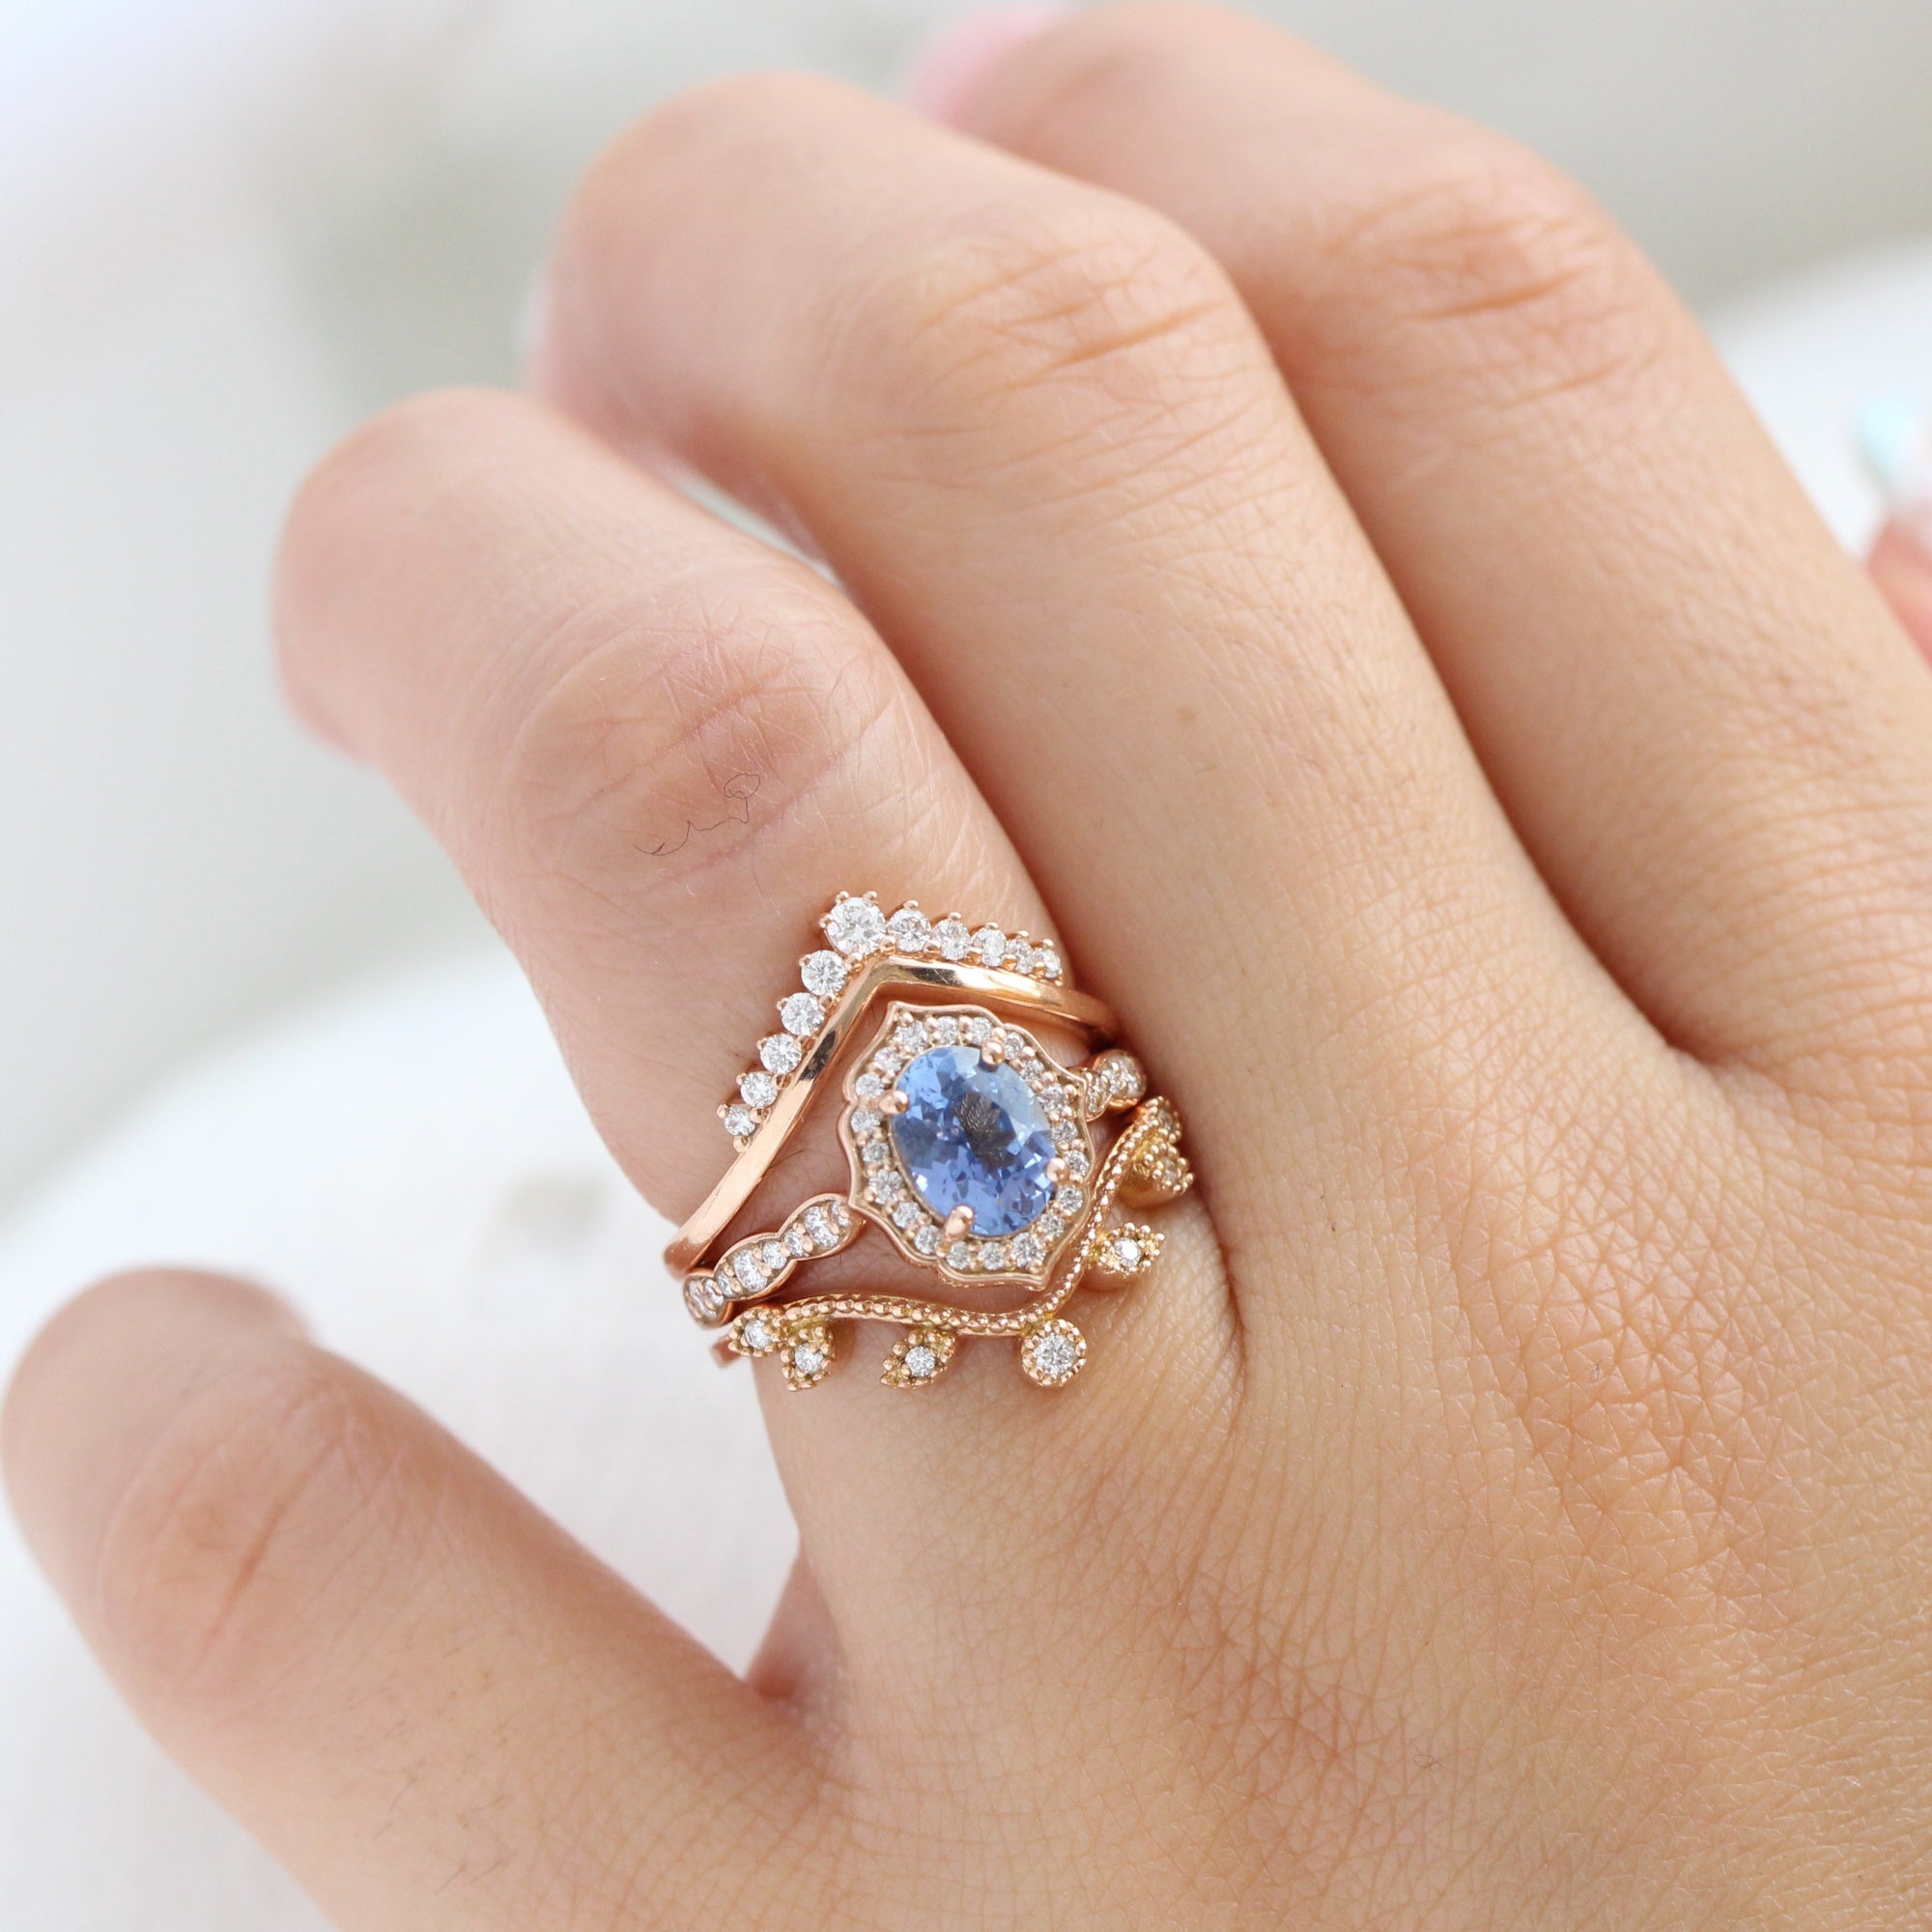 Oval aqua blue sapphire ring rose gold vintage halo diamond ring la more design jewelry